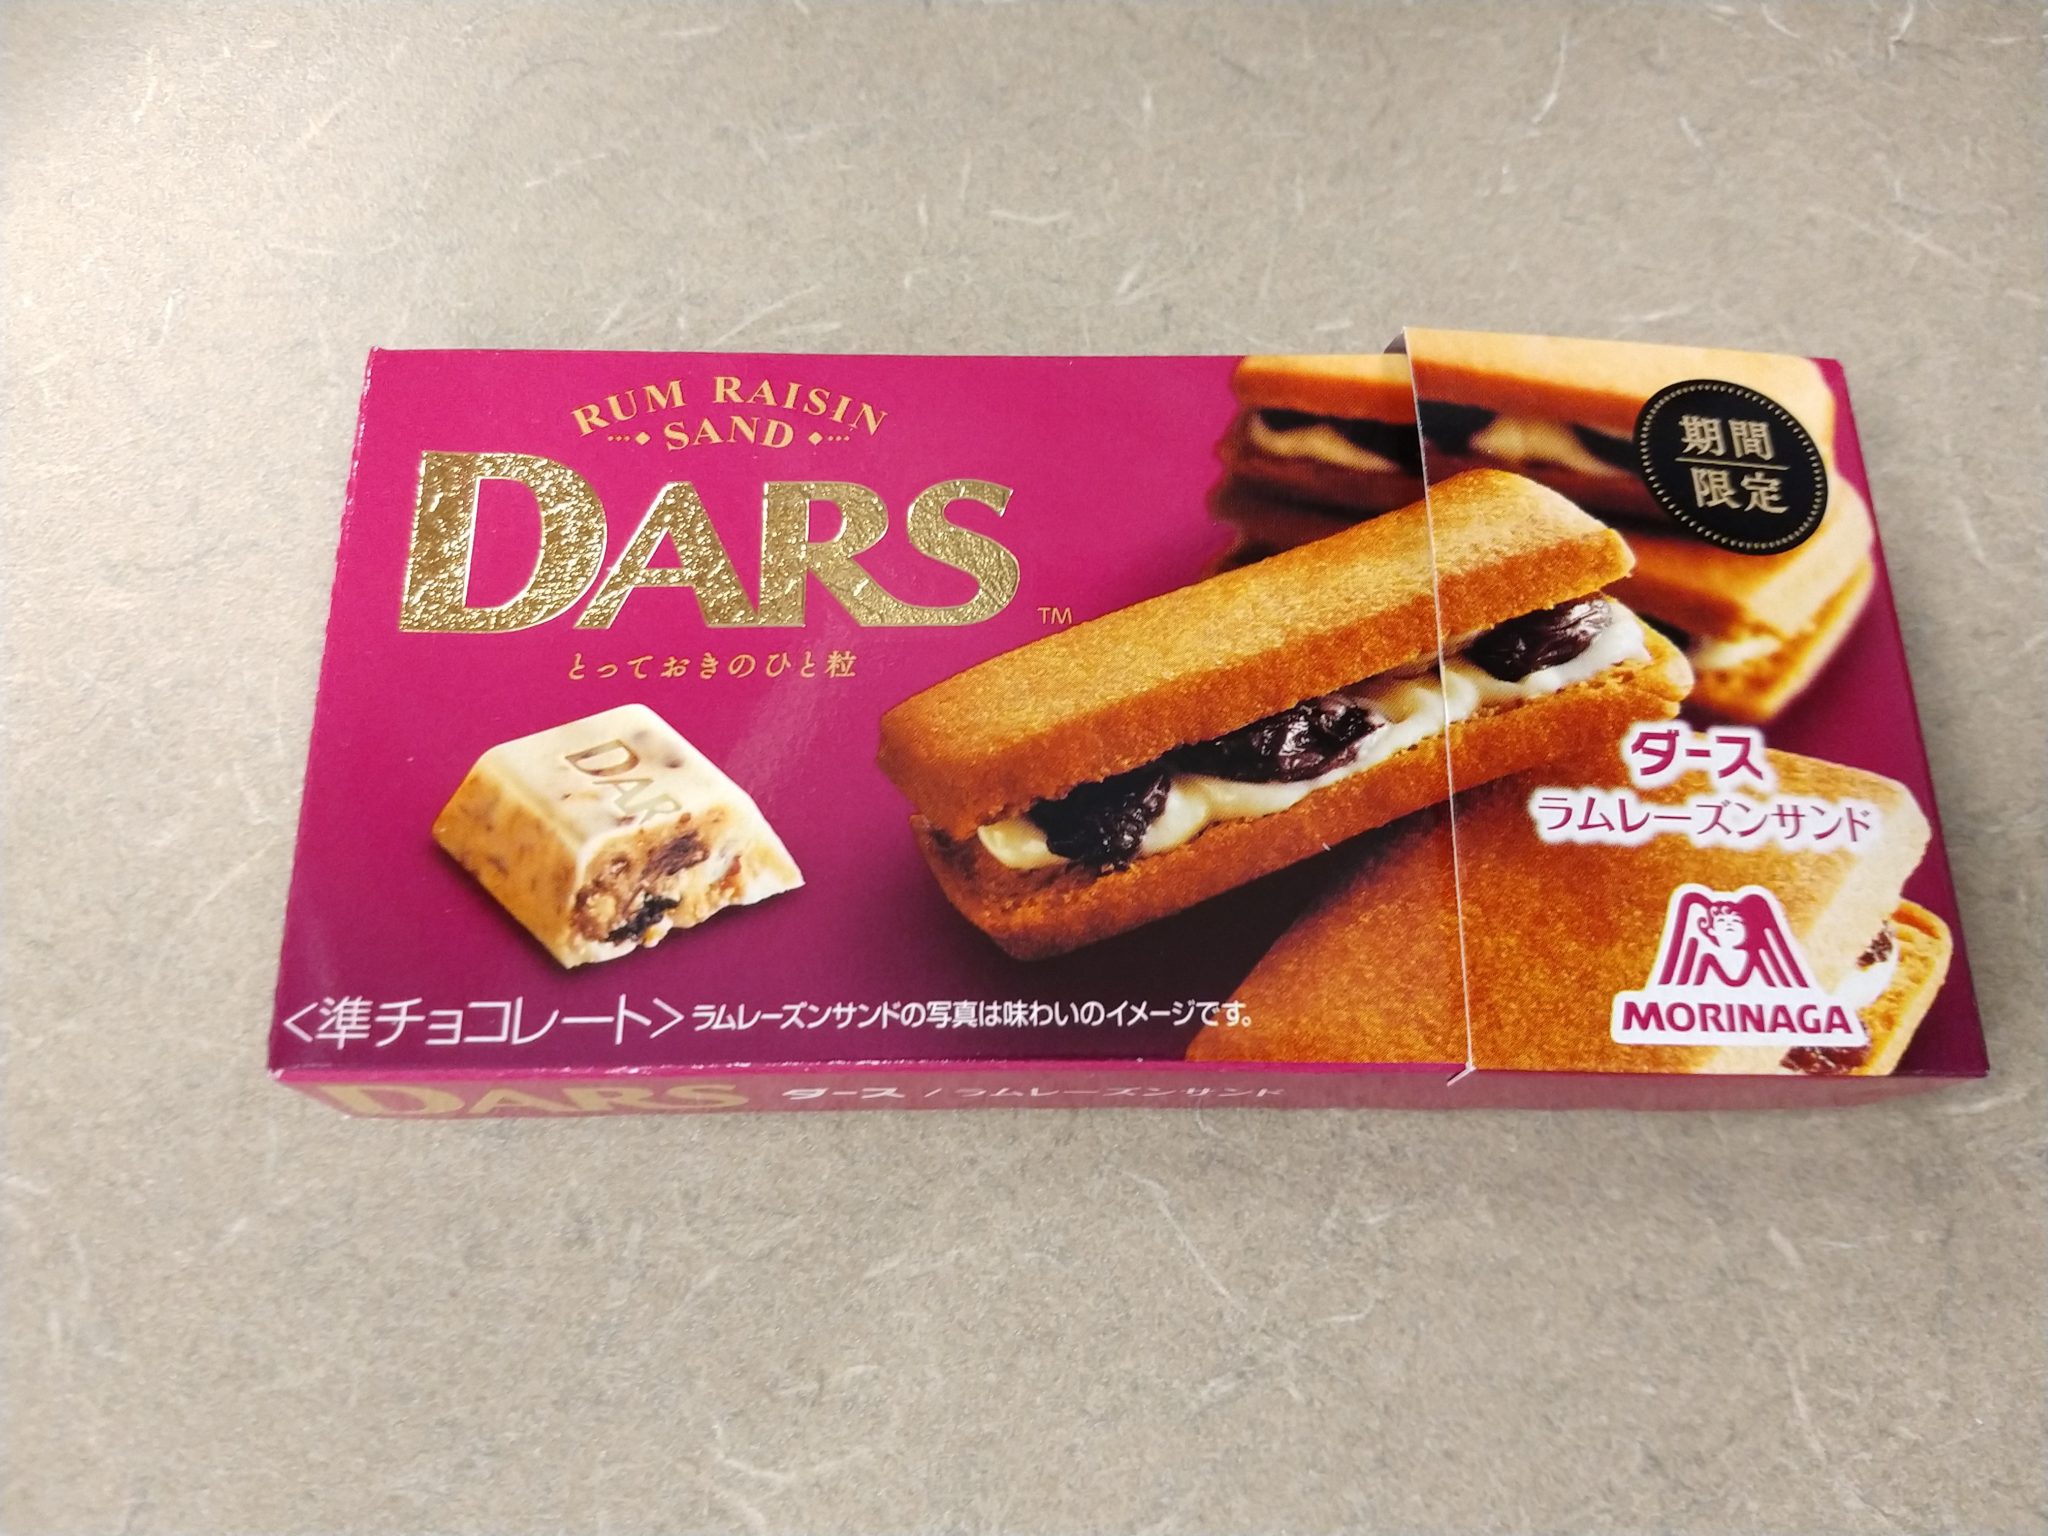 DARS Chocolate – Rum Raisin Cookie